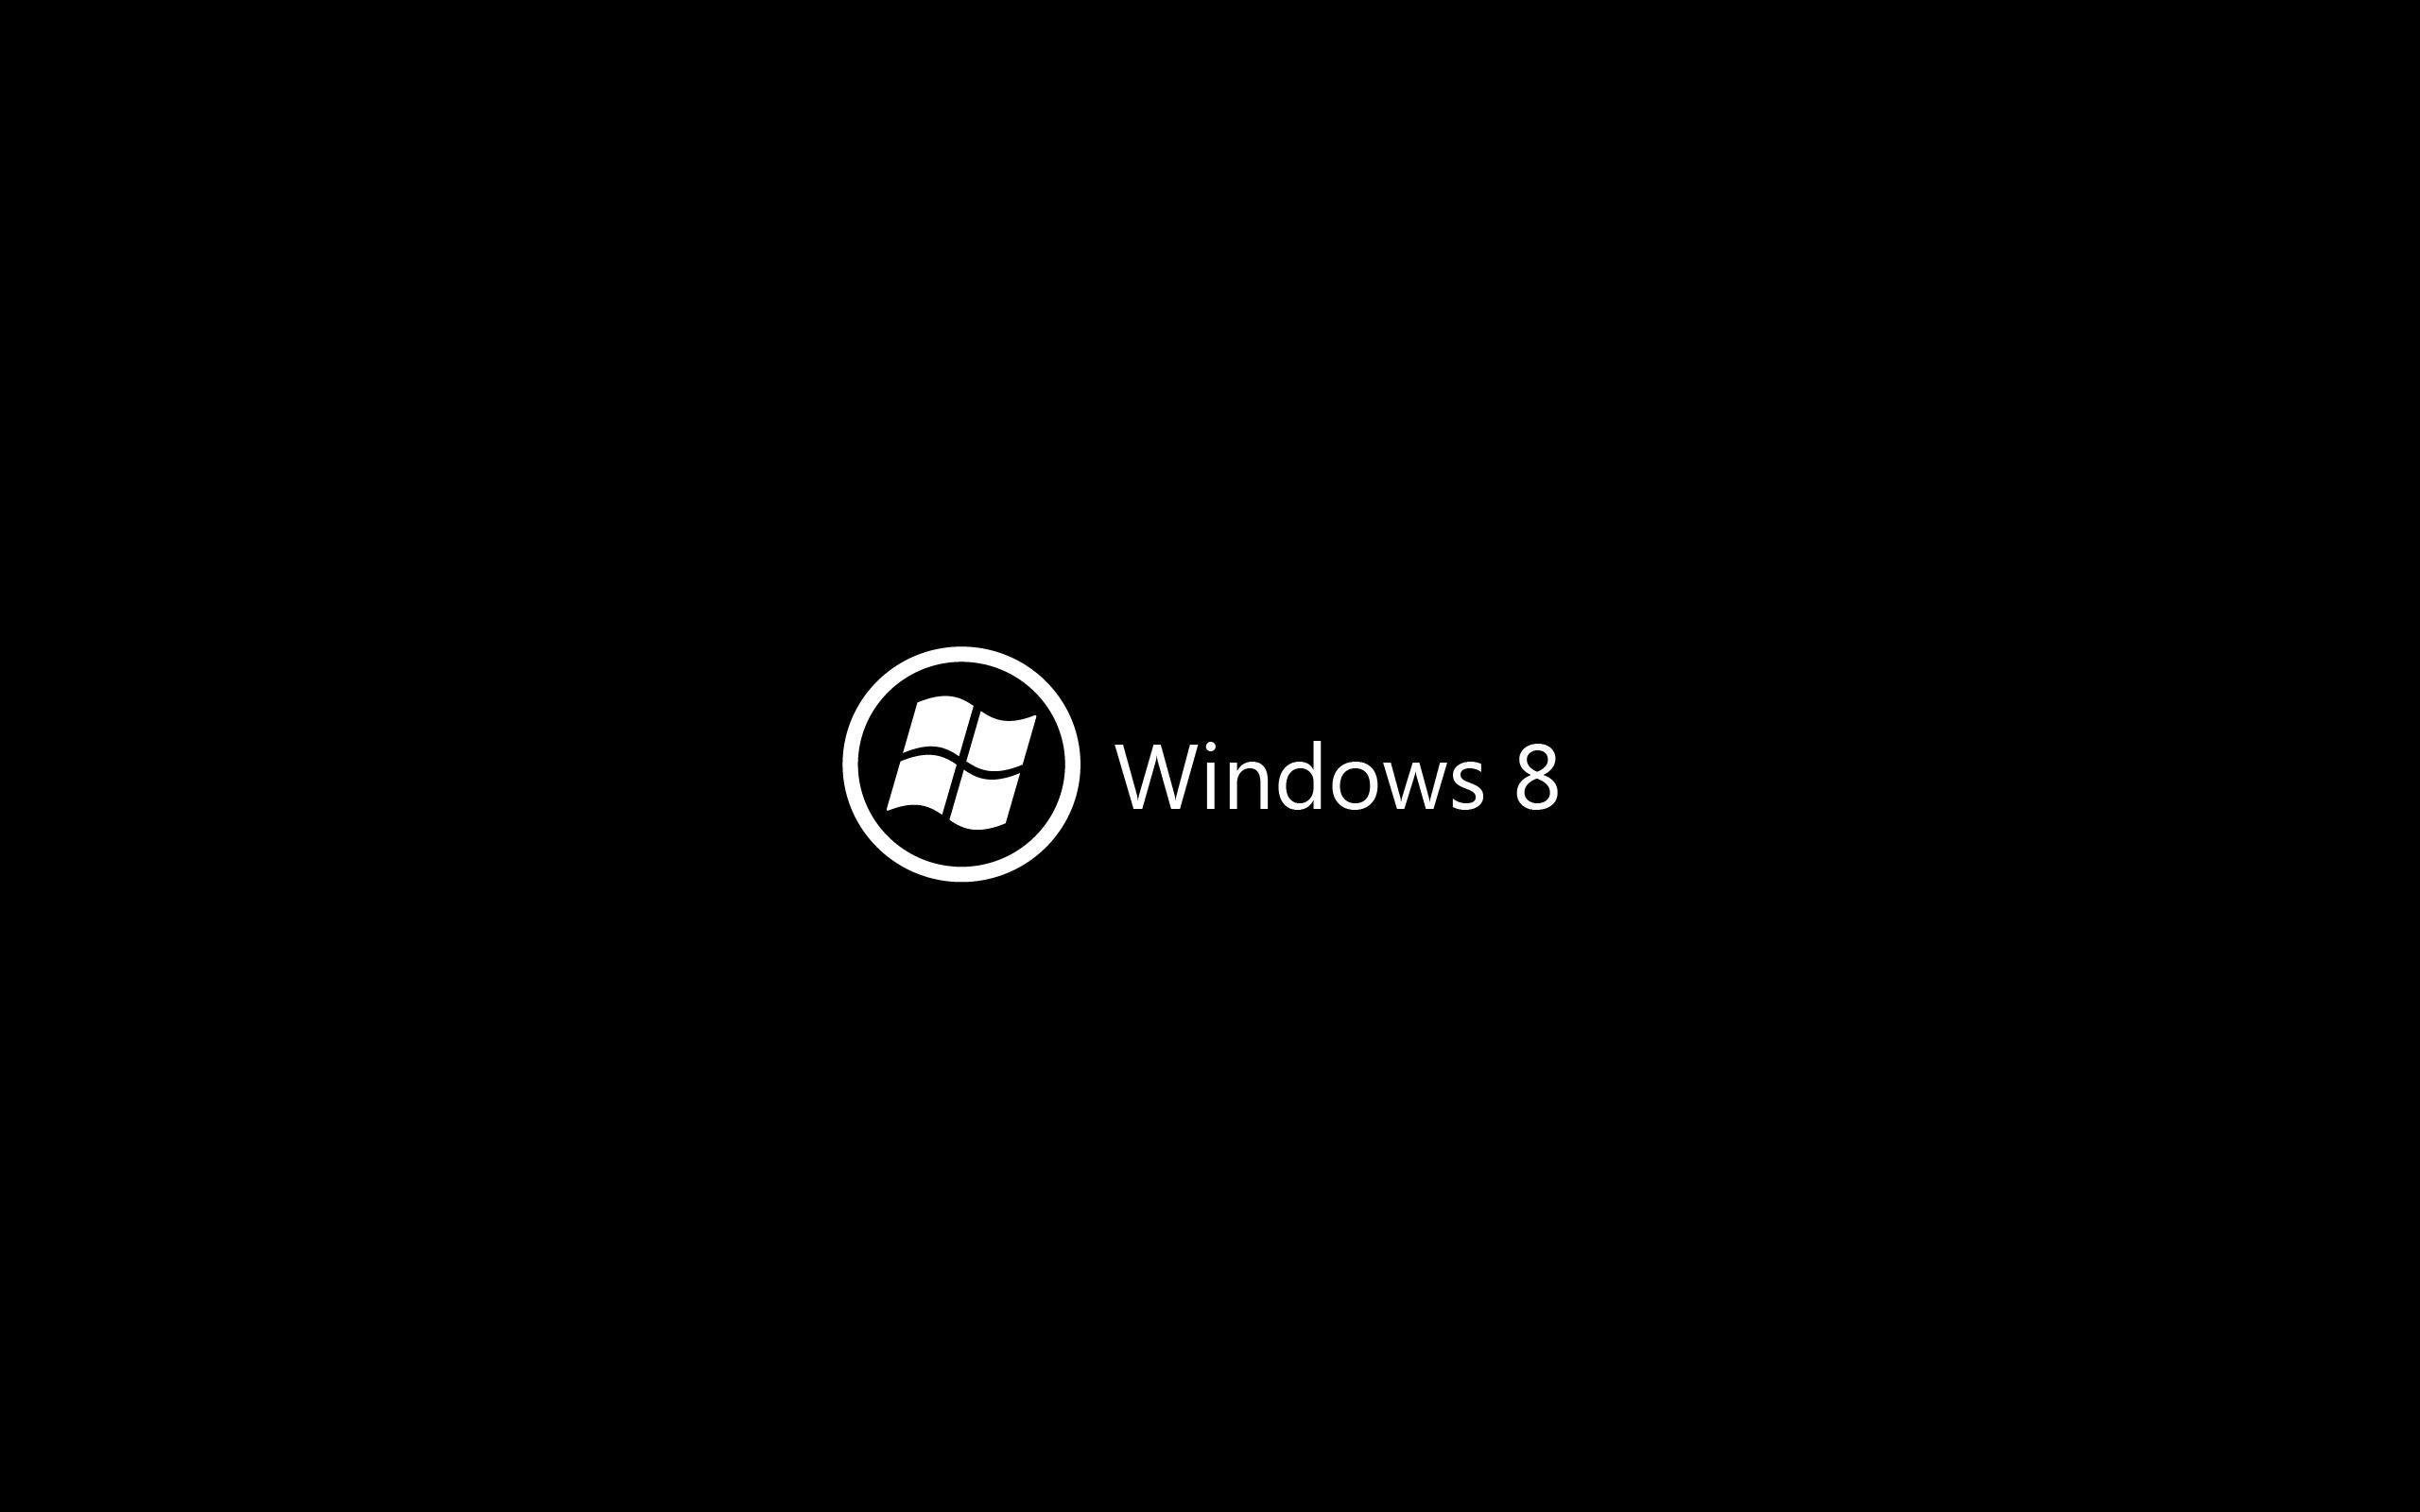 Windows 8 Black Wallpaper HD For Desktop